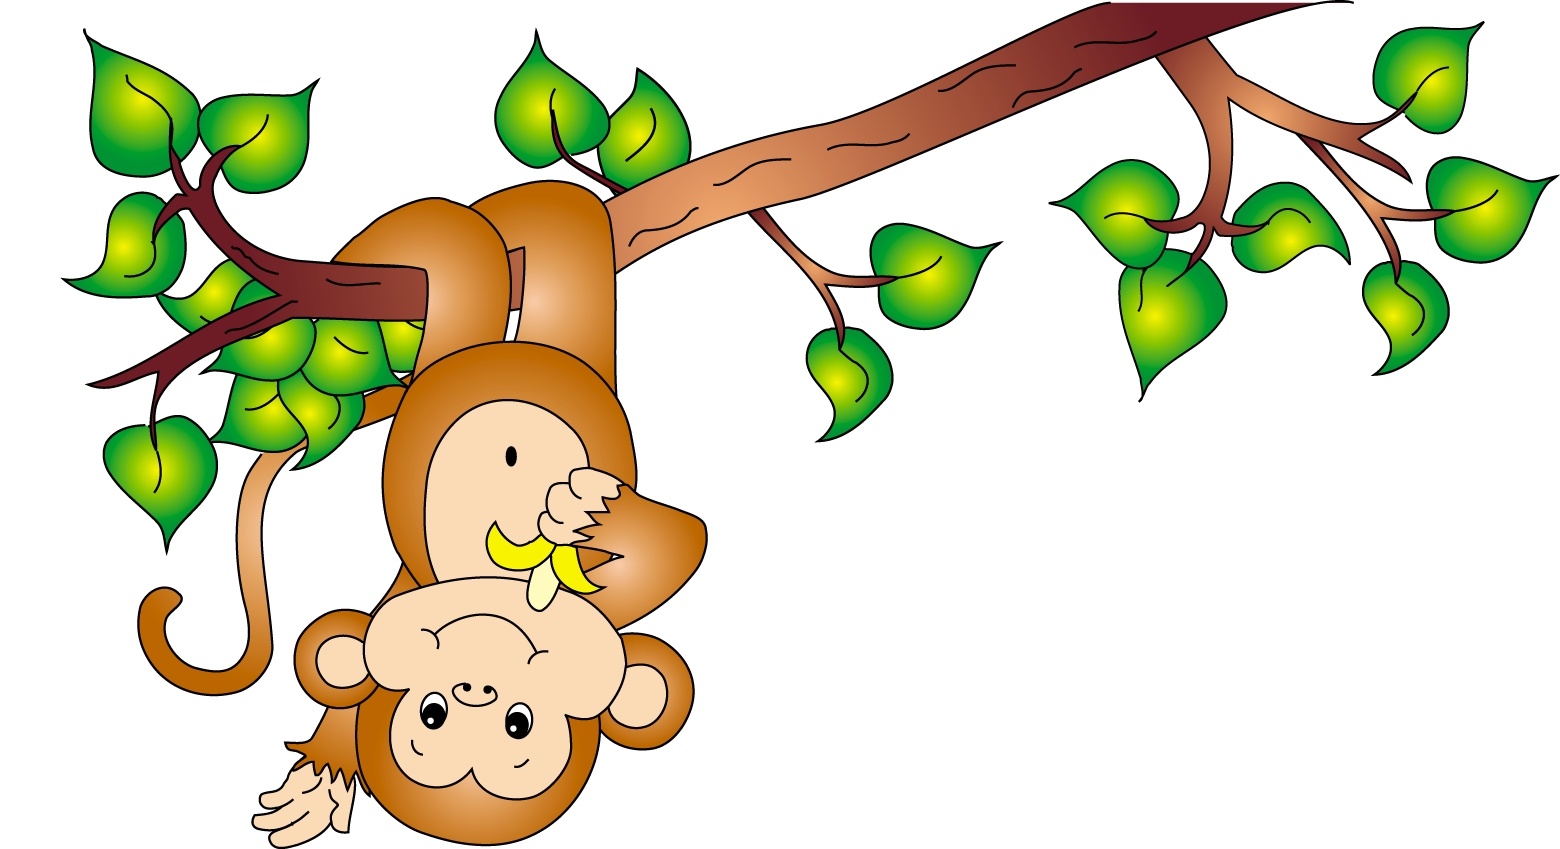 Cute Monkey Clip Art   Clipart Panda   Free Clipart Images